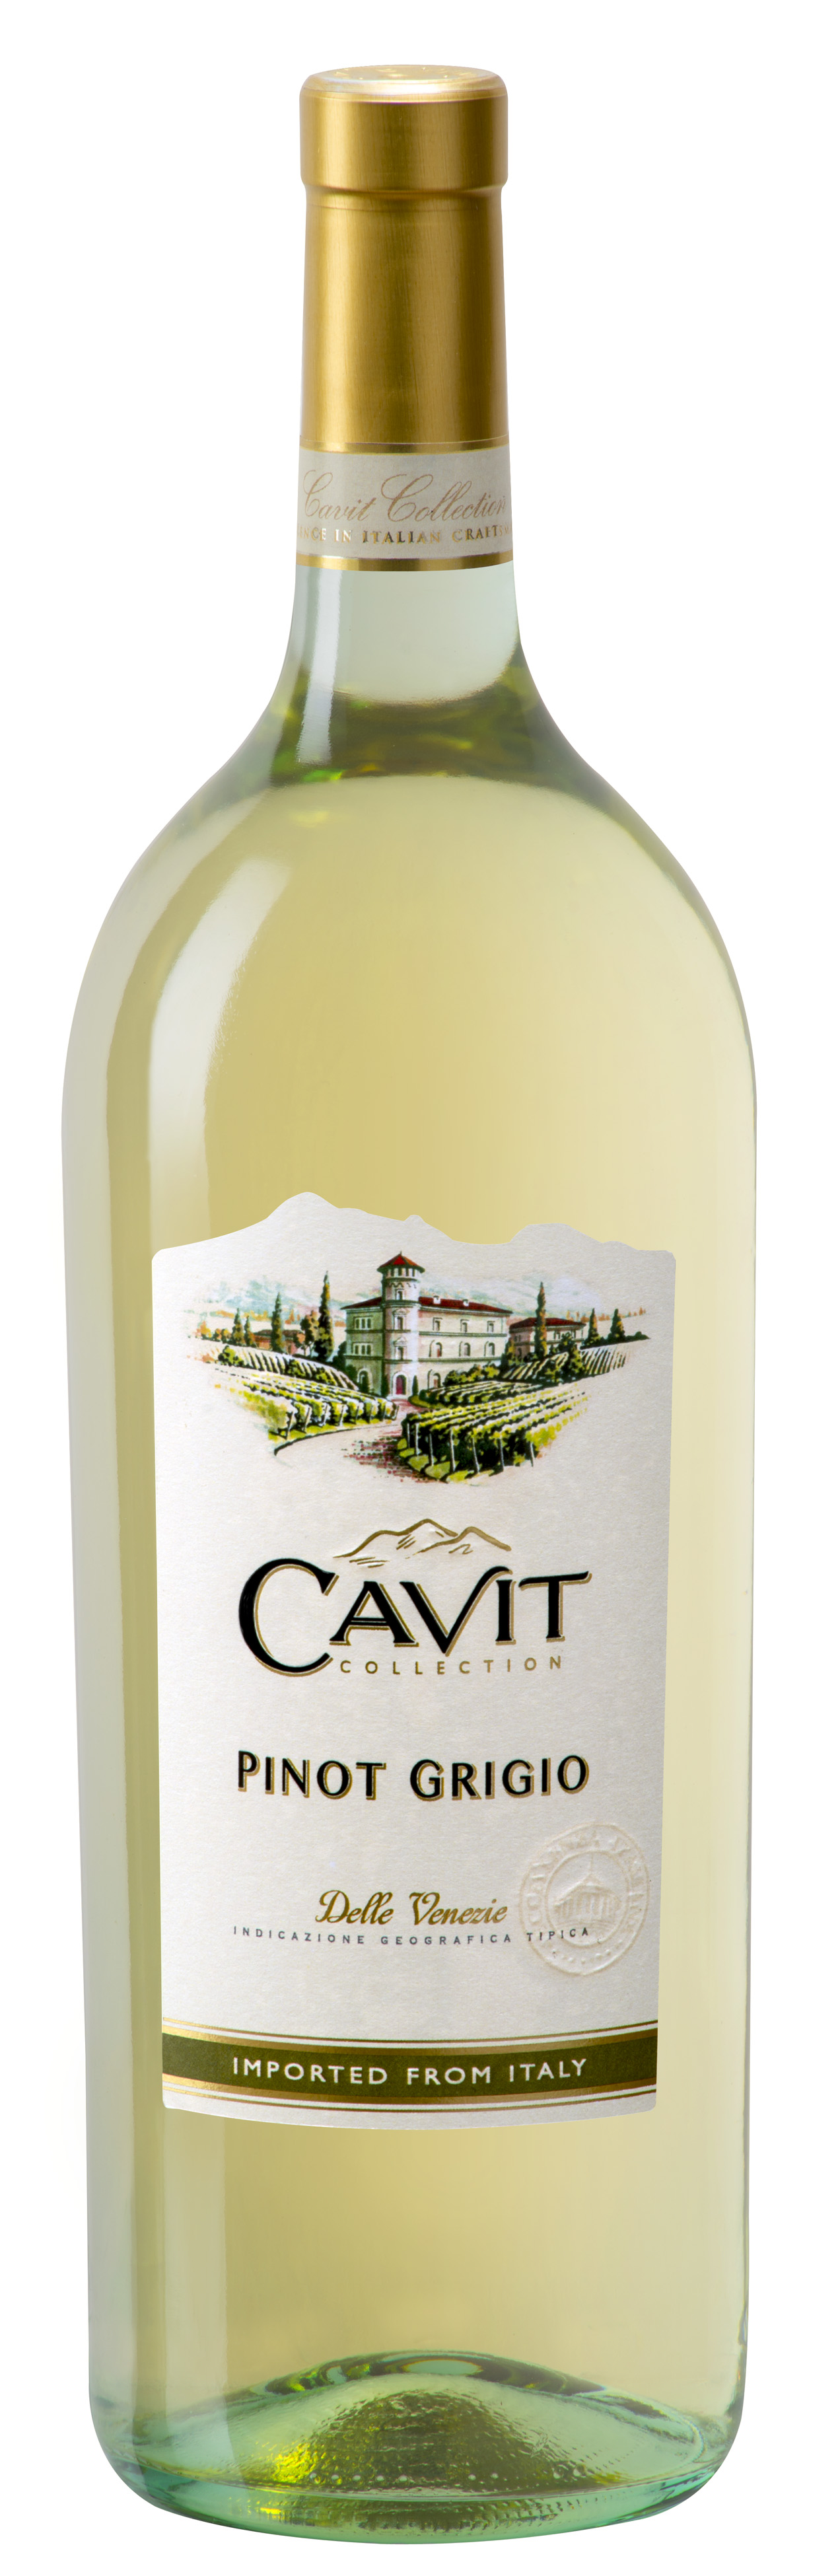 Cavit Pinot Grigio 1.5L.jpg